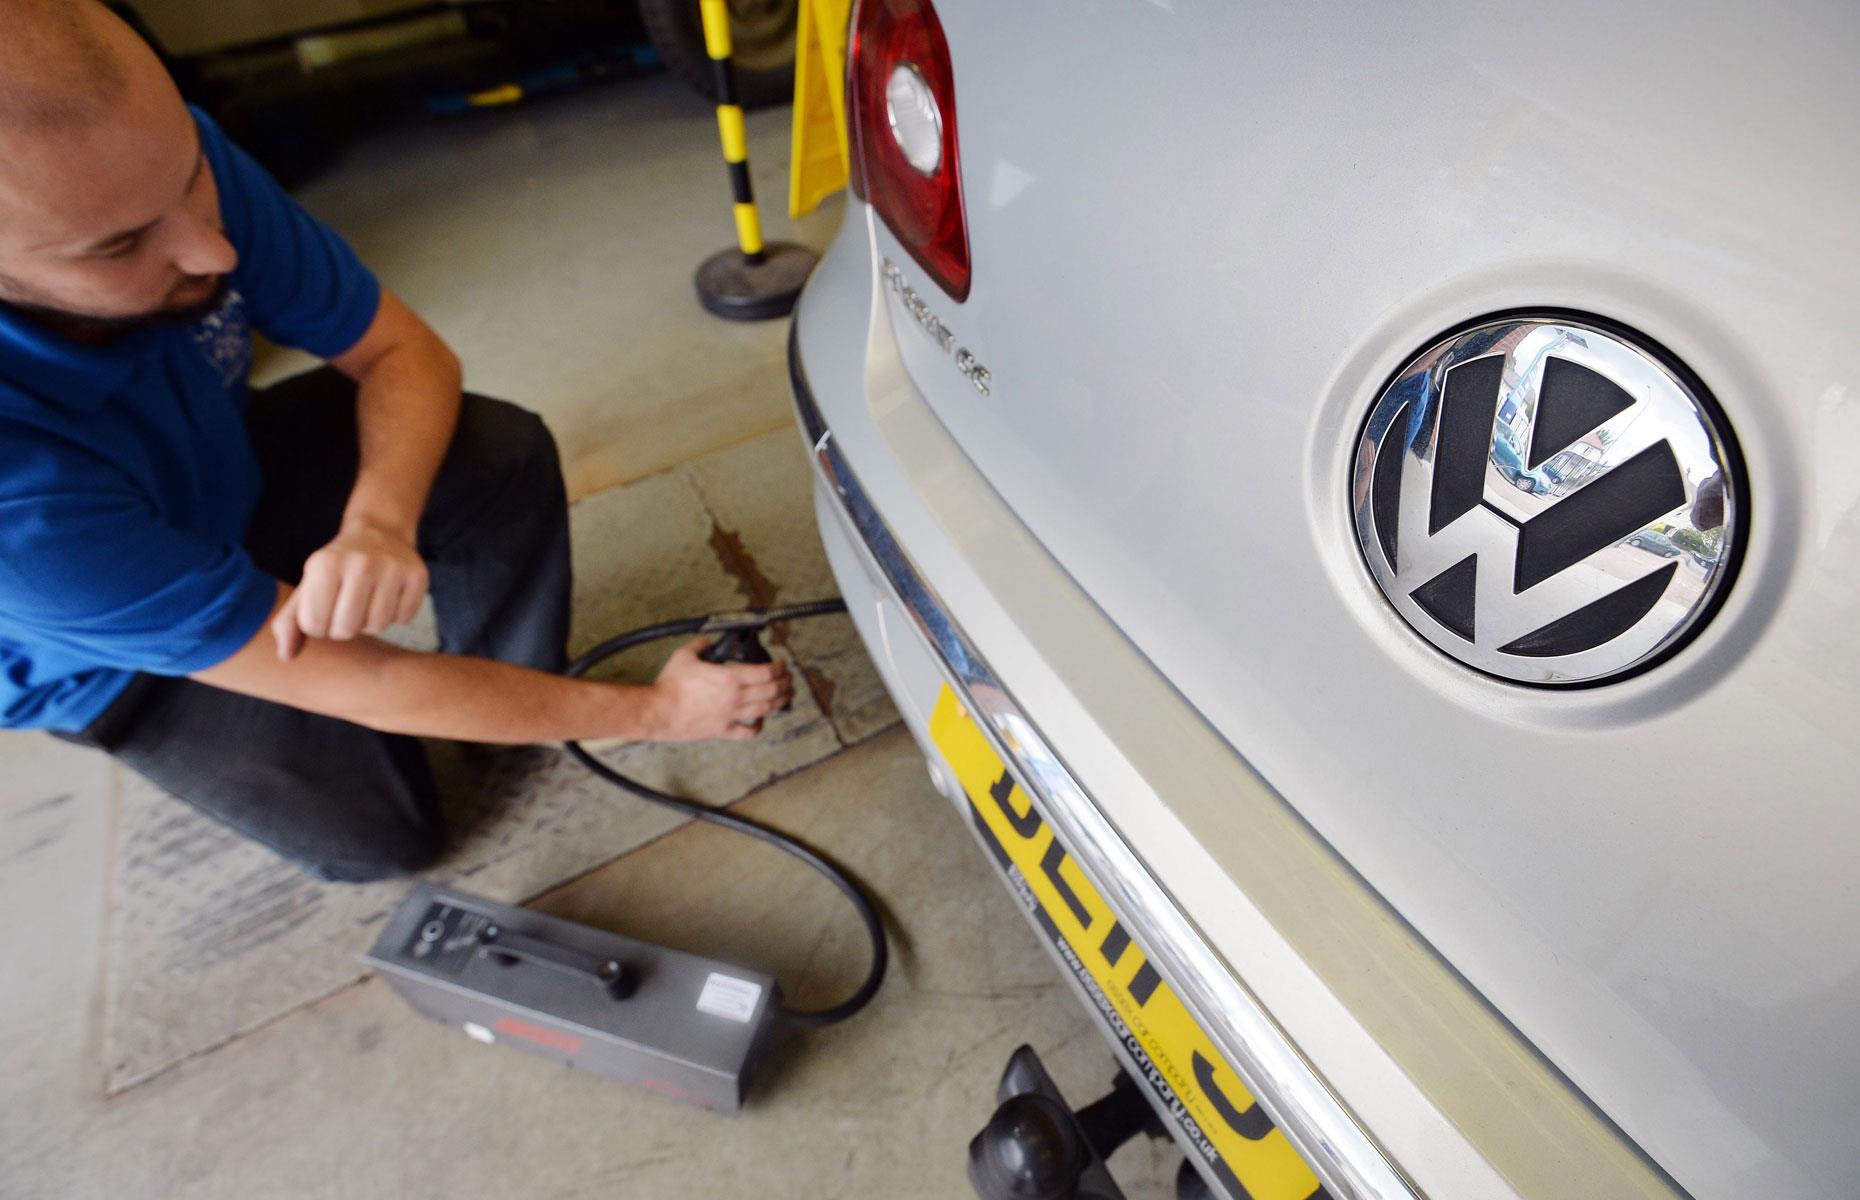 Volkswagen and 'emissionsgate'